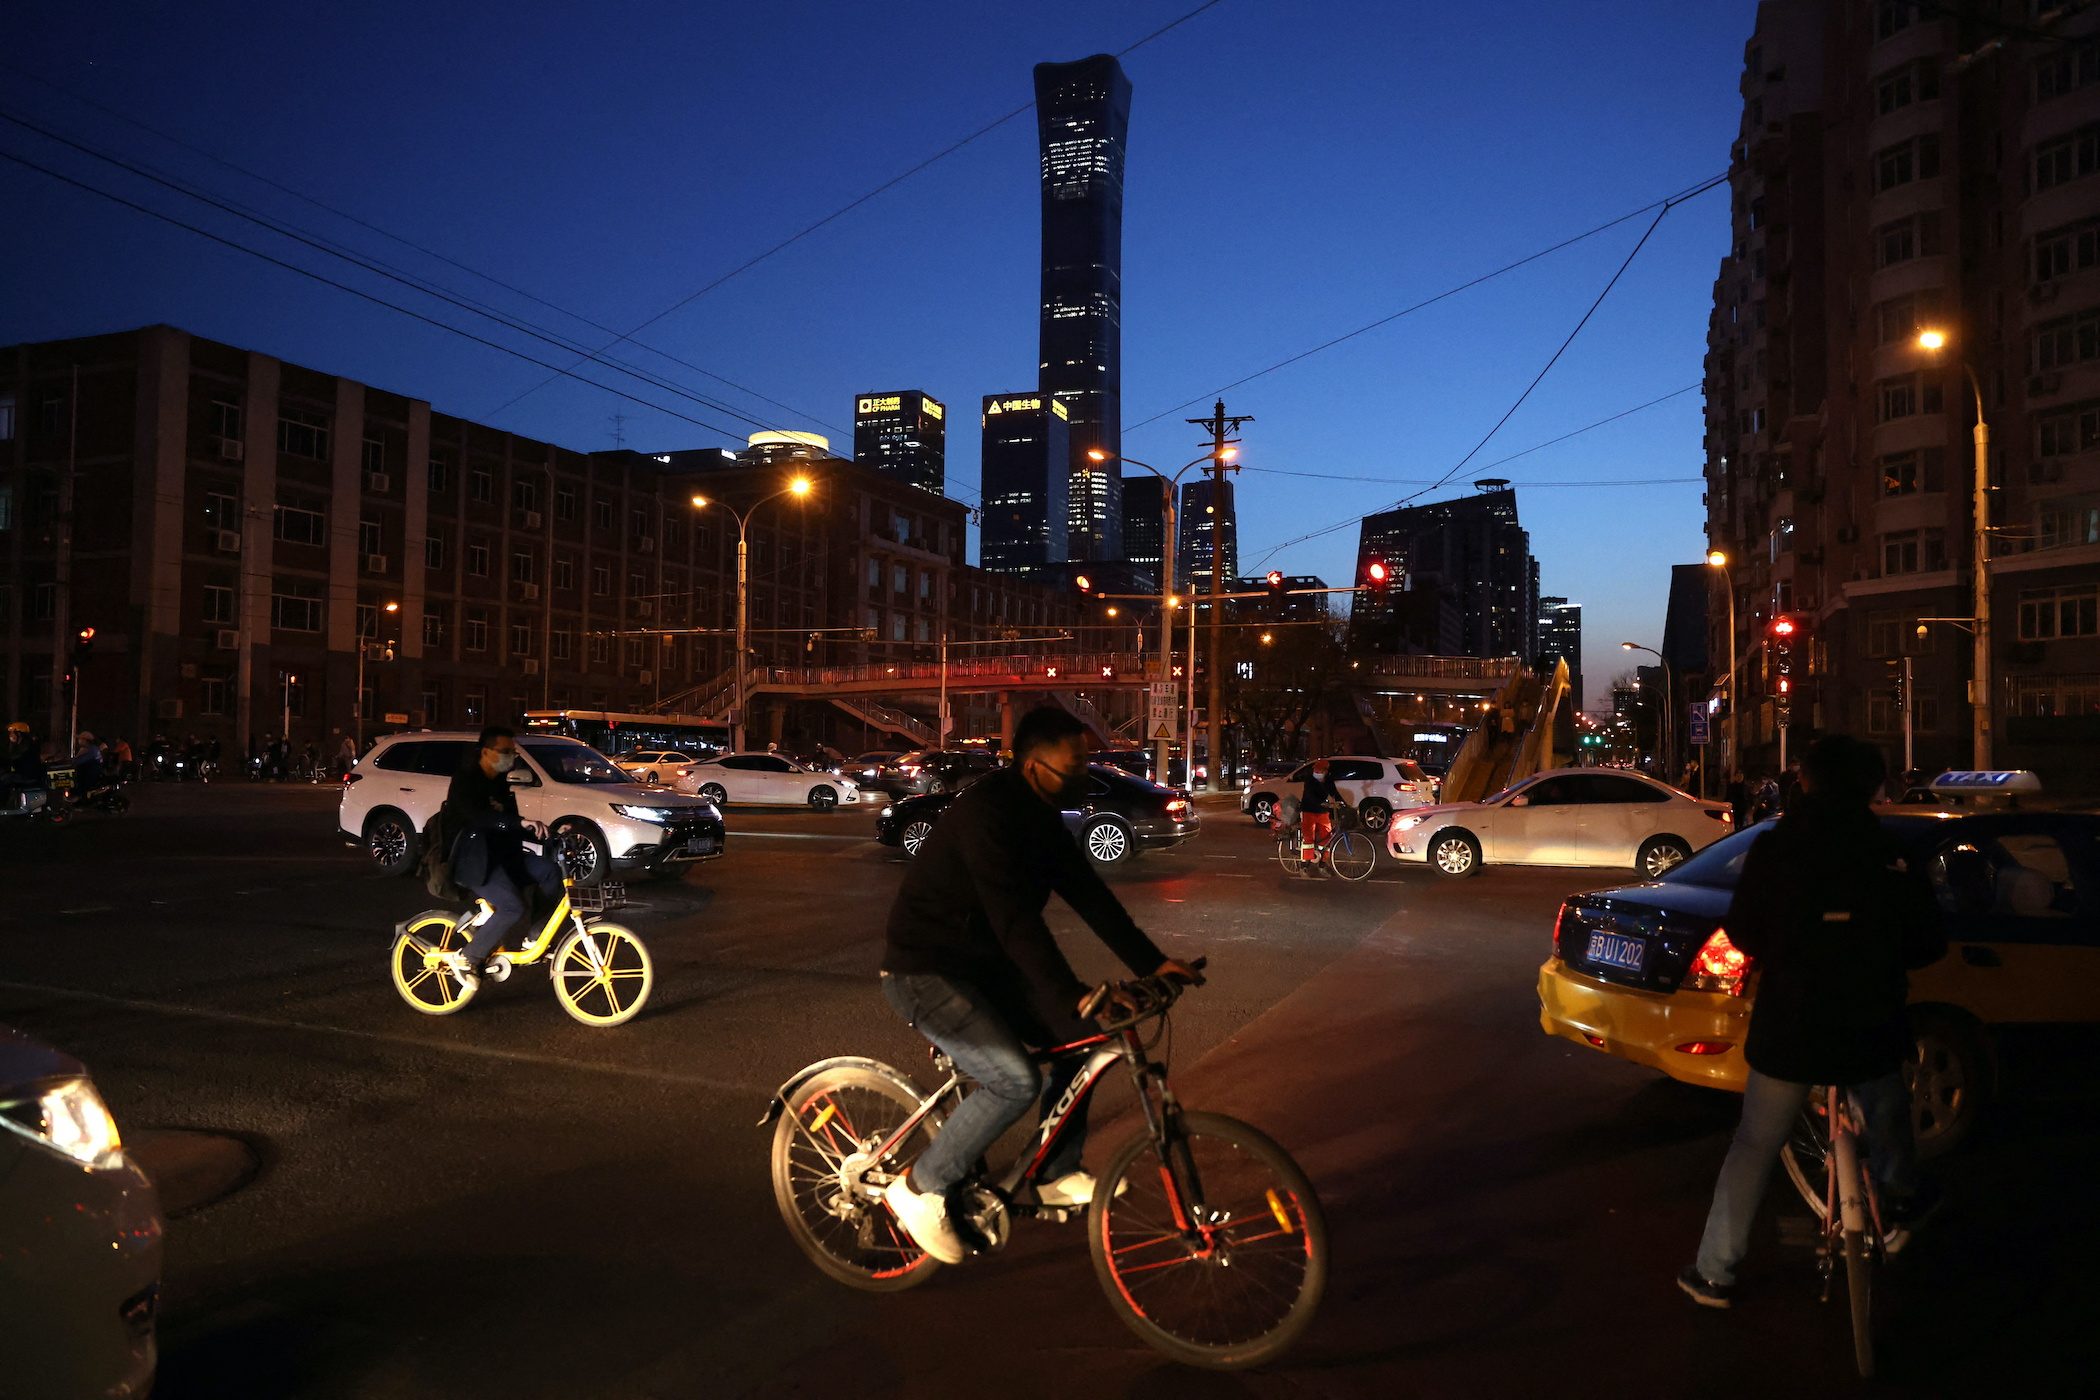 A prolonged China slowdown raises risks for global economy, IMF chief says